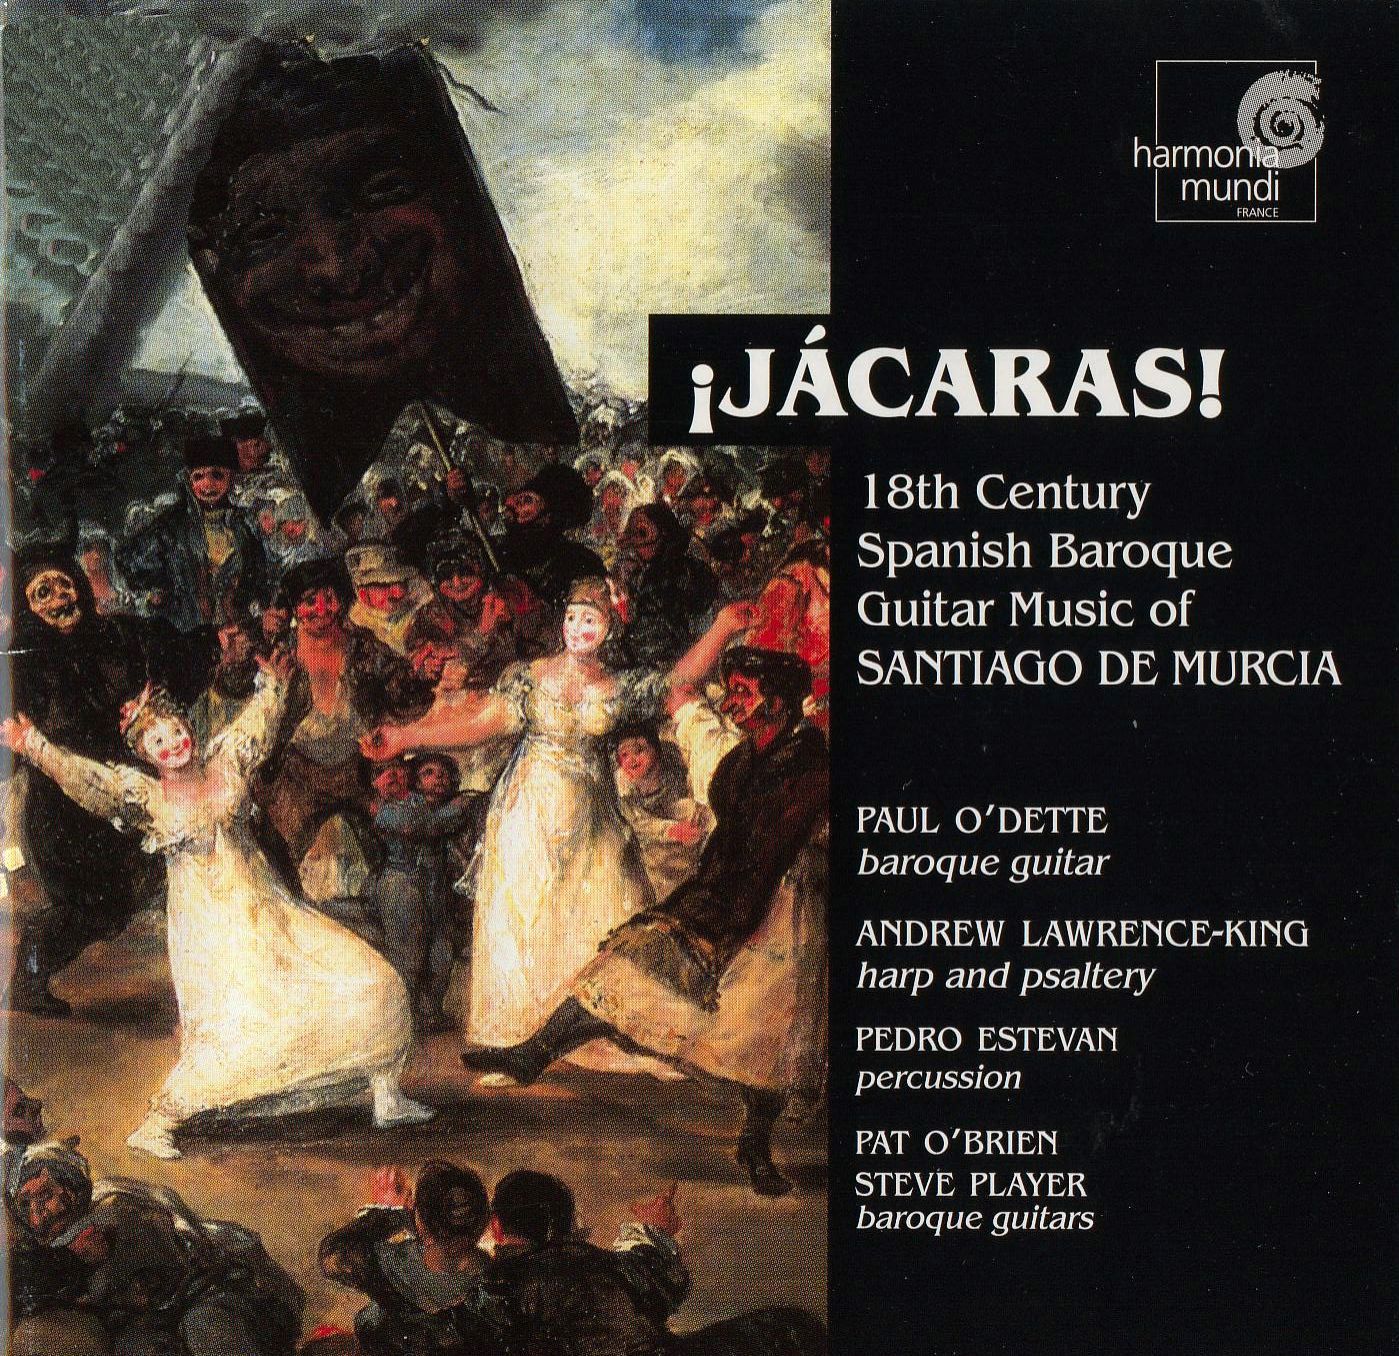 Jacaras! 18th Century Spanish Baroque Guitar Music of Santiago de Murcia